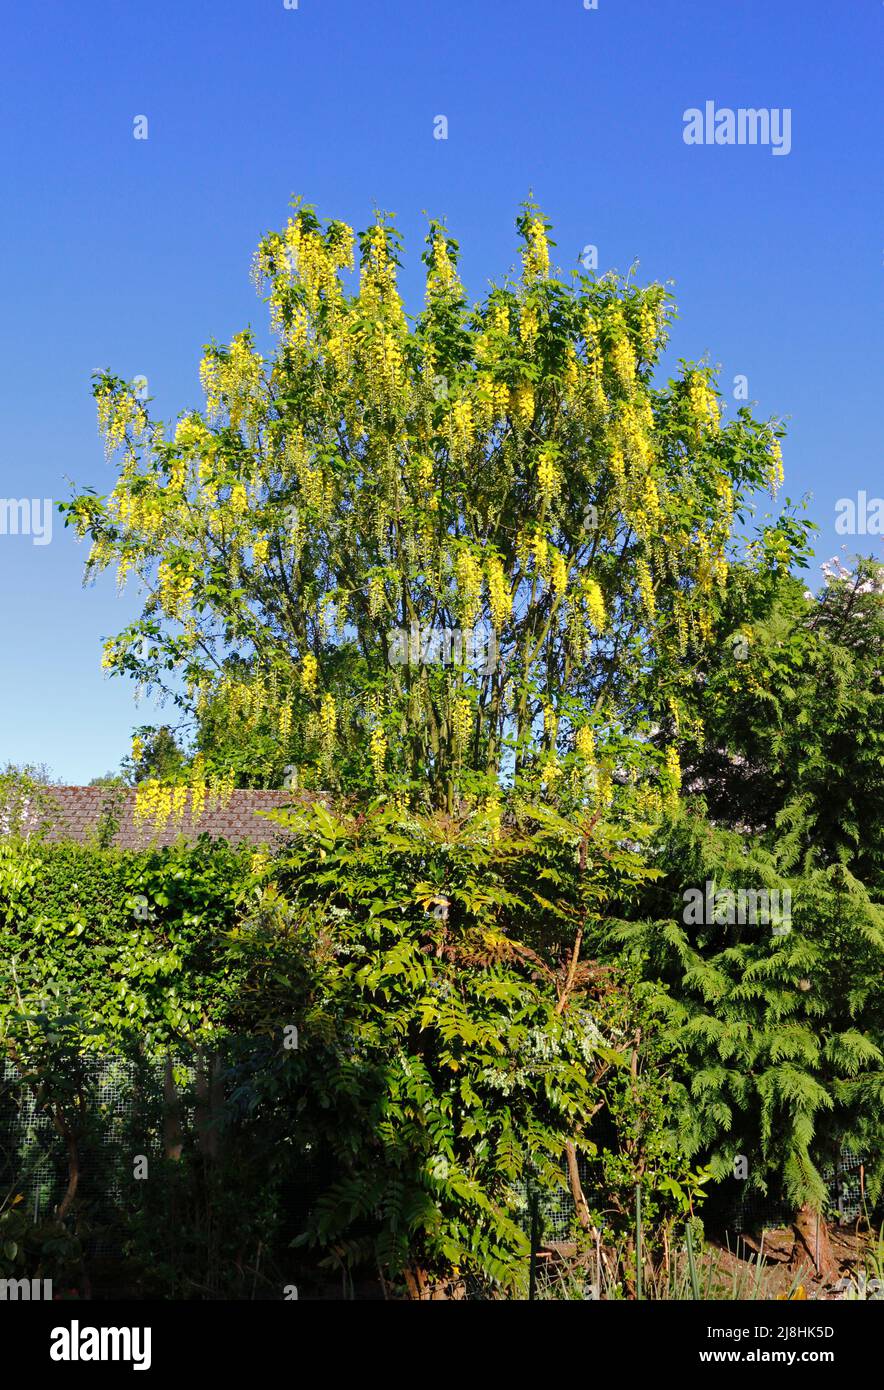 A Laburnum tree, Laburnum X watereri 'Vossii', flowering in an urban garden in spring at Hellesdon, Norfolk, England, United Kingdom. Stock Photo